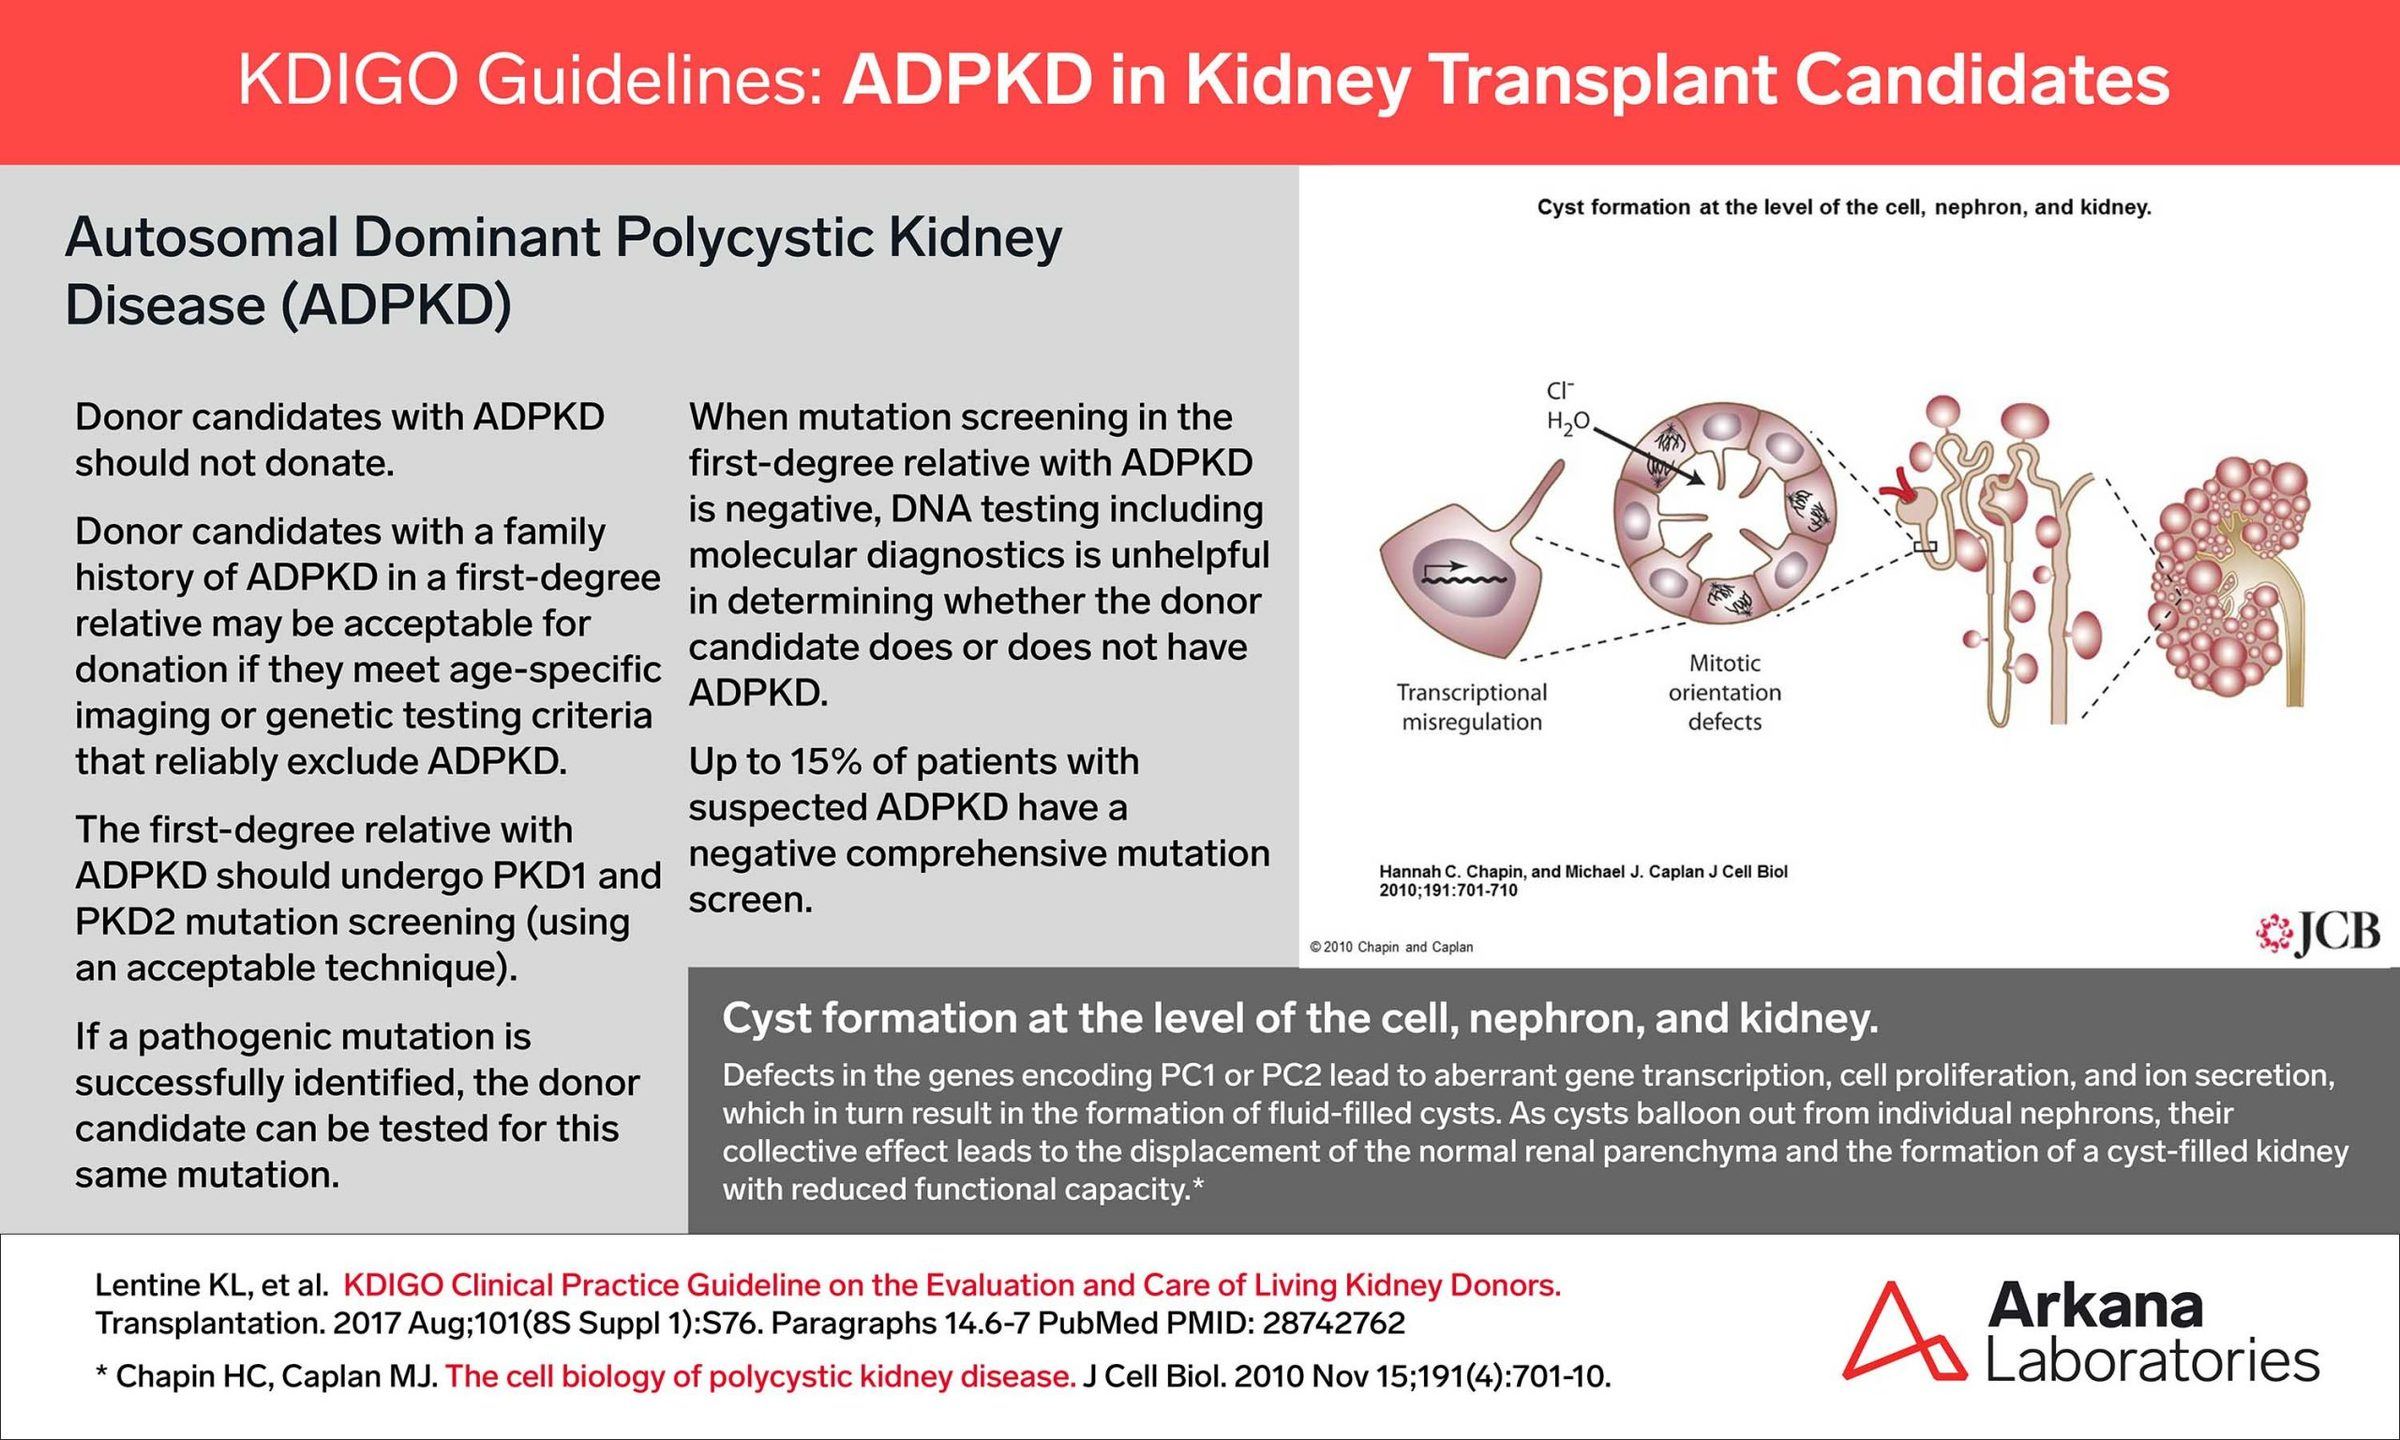 ADPKD, ADPKD in Kidney Transplant Candidates, KDIGO, Arkana Laboratories, Dr. David Bourne, kidney diseases